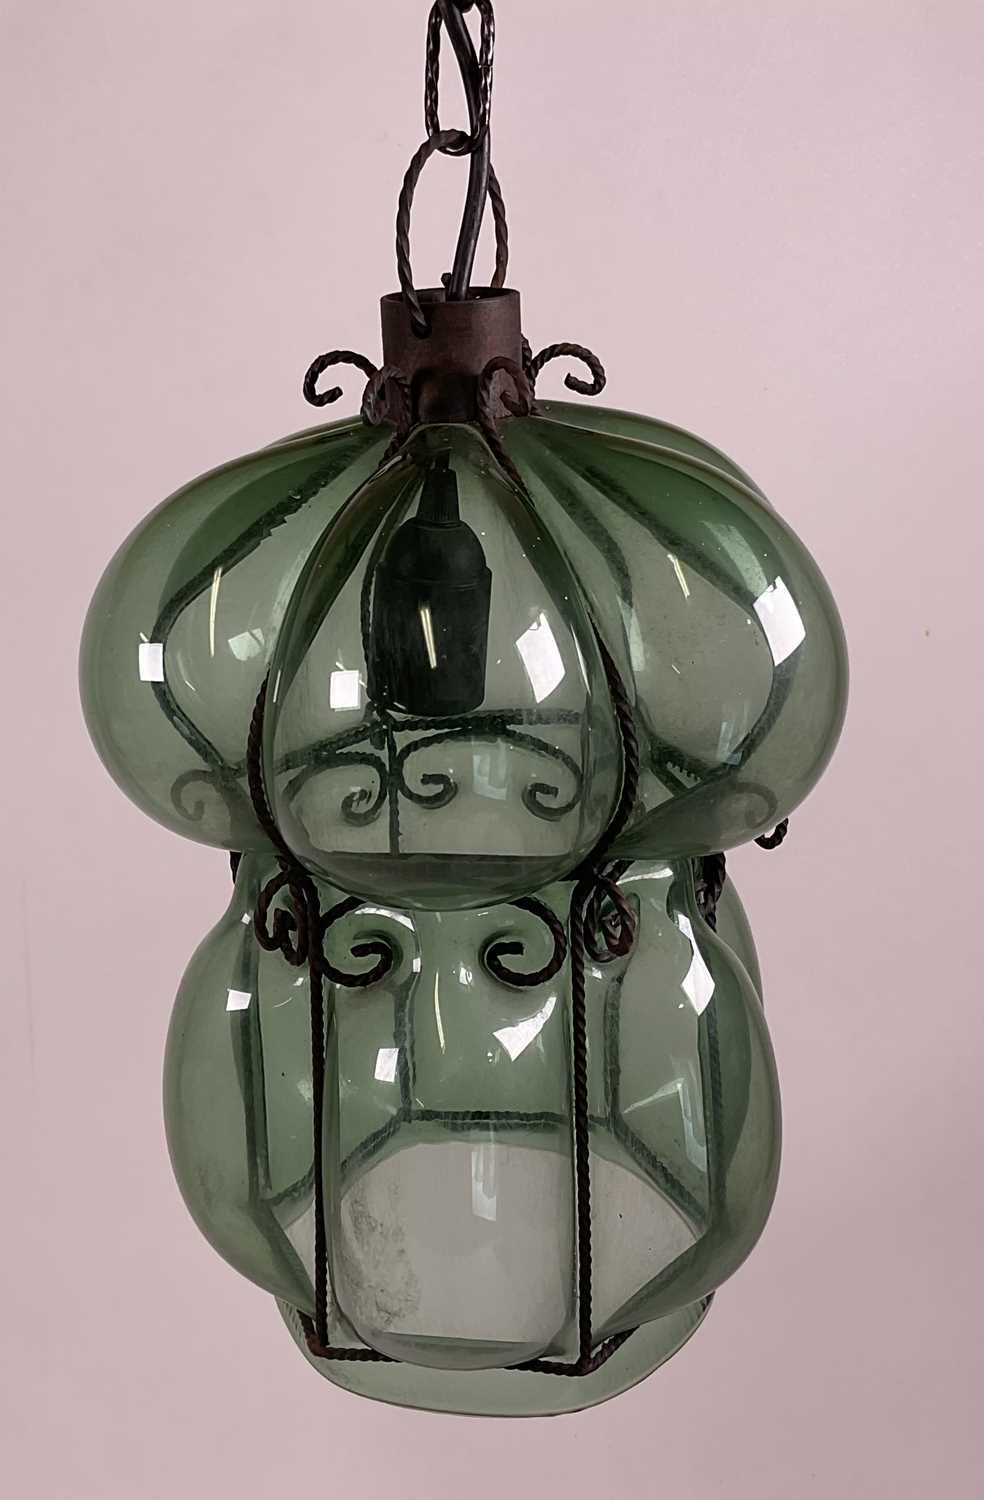 A Venetian glass, hand blown green bubble pendant light with metal framework. H: 34cm - Image 2 of 3